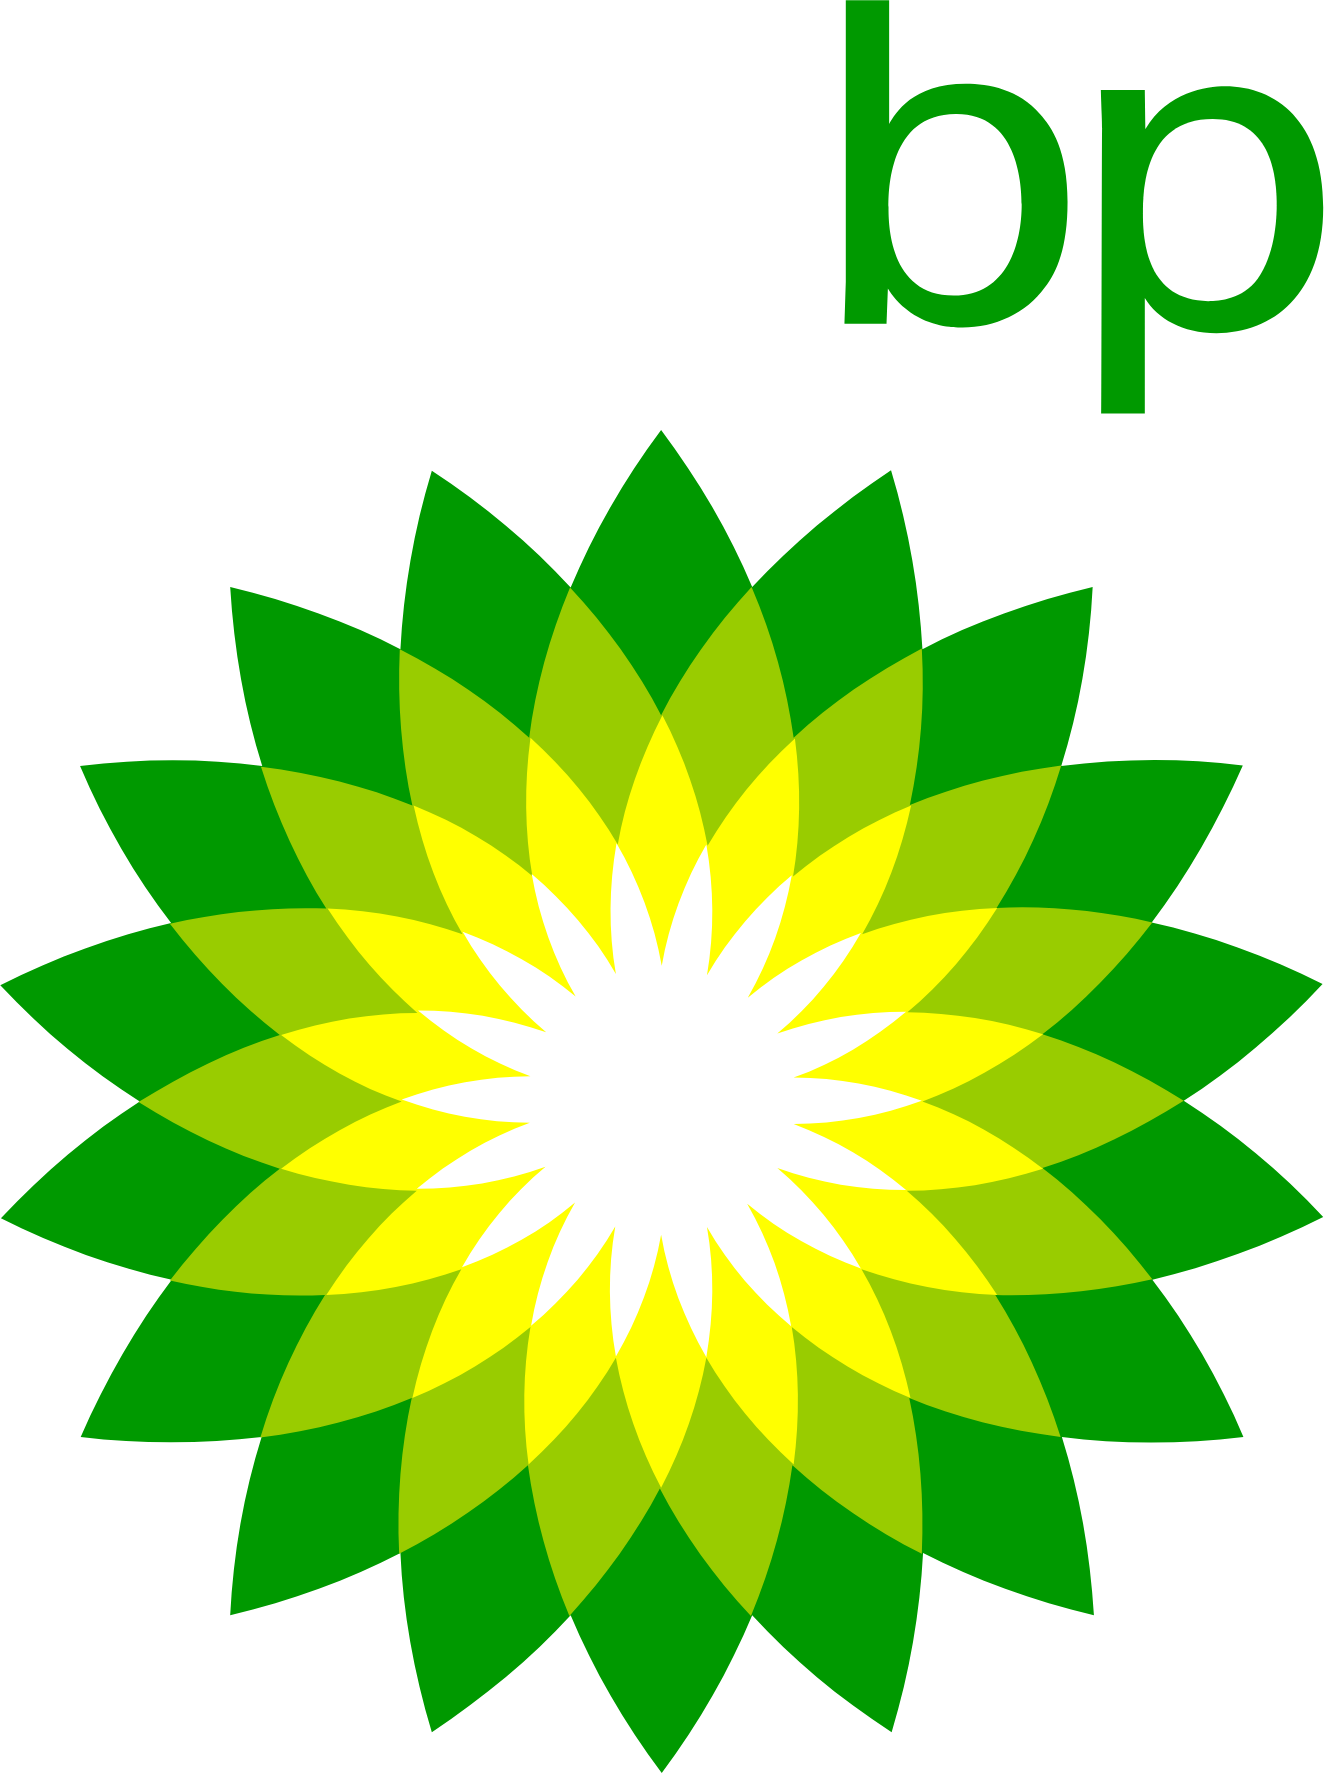 BP logo large (transparent PNG)